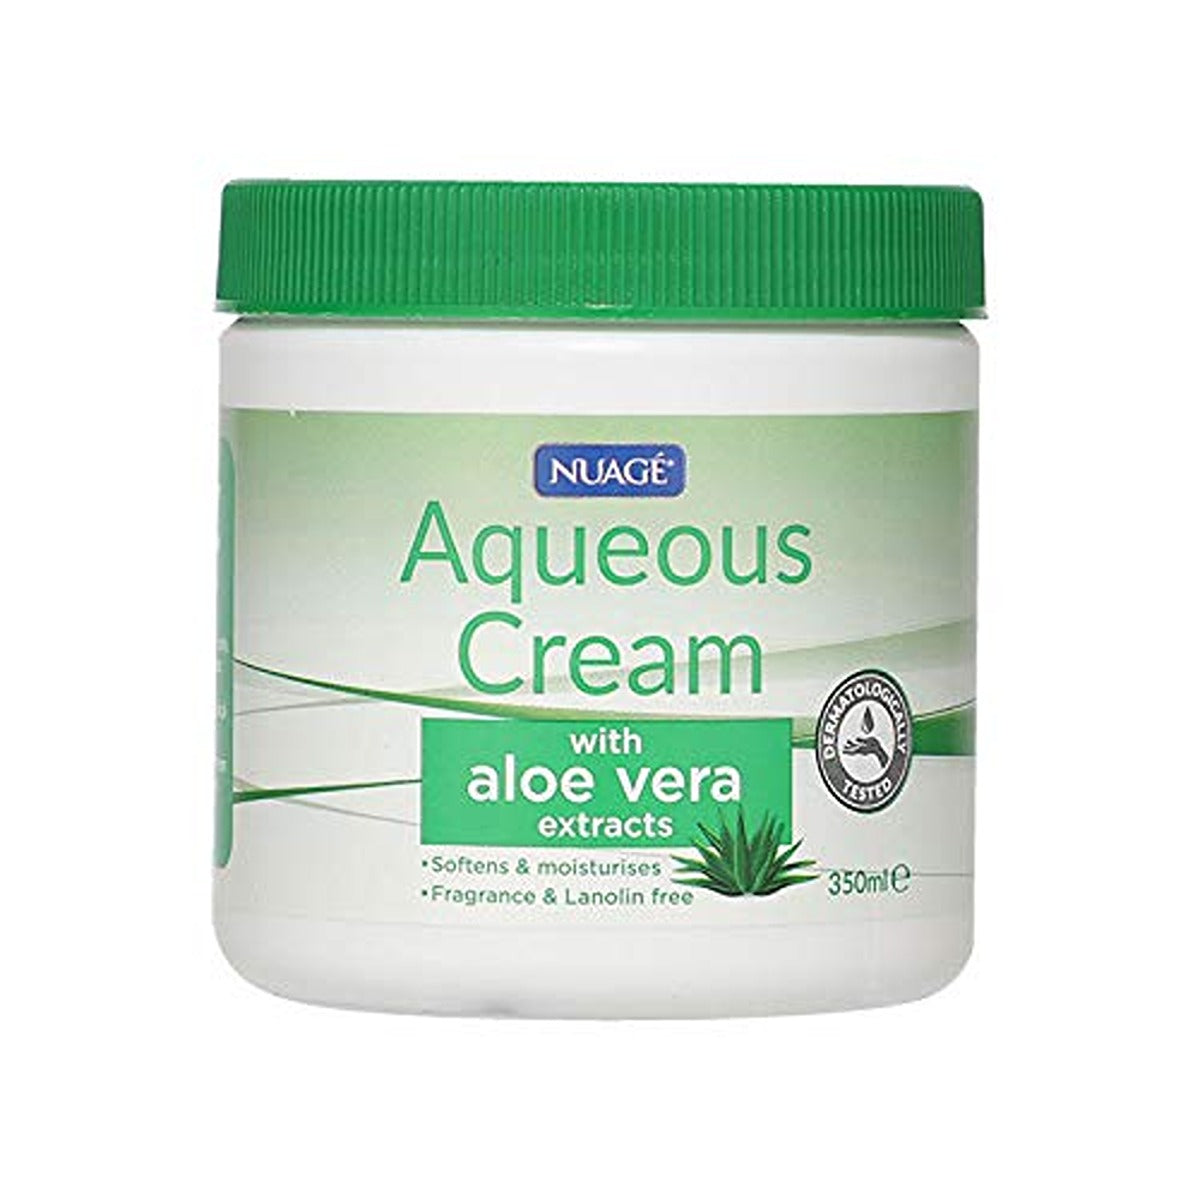 Nuage Aqueous - Moisturising Cream Aloe Vera Extracts - 350g - Continental Food Store